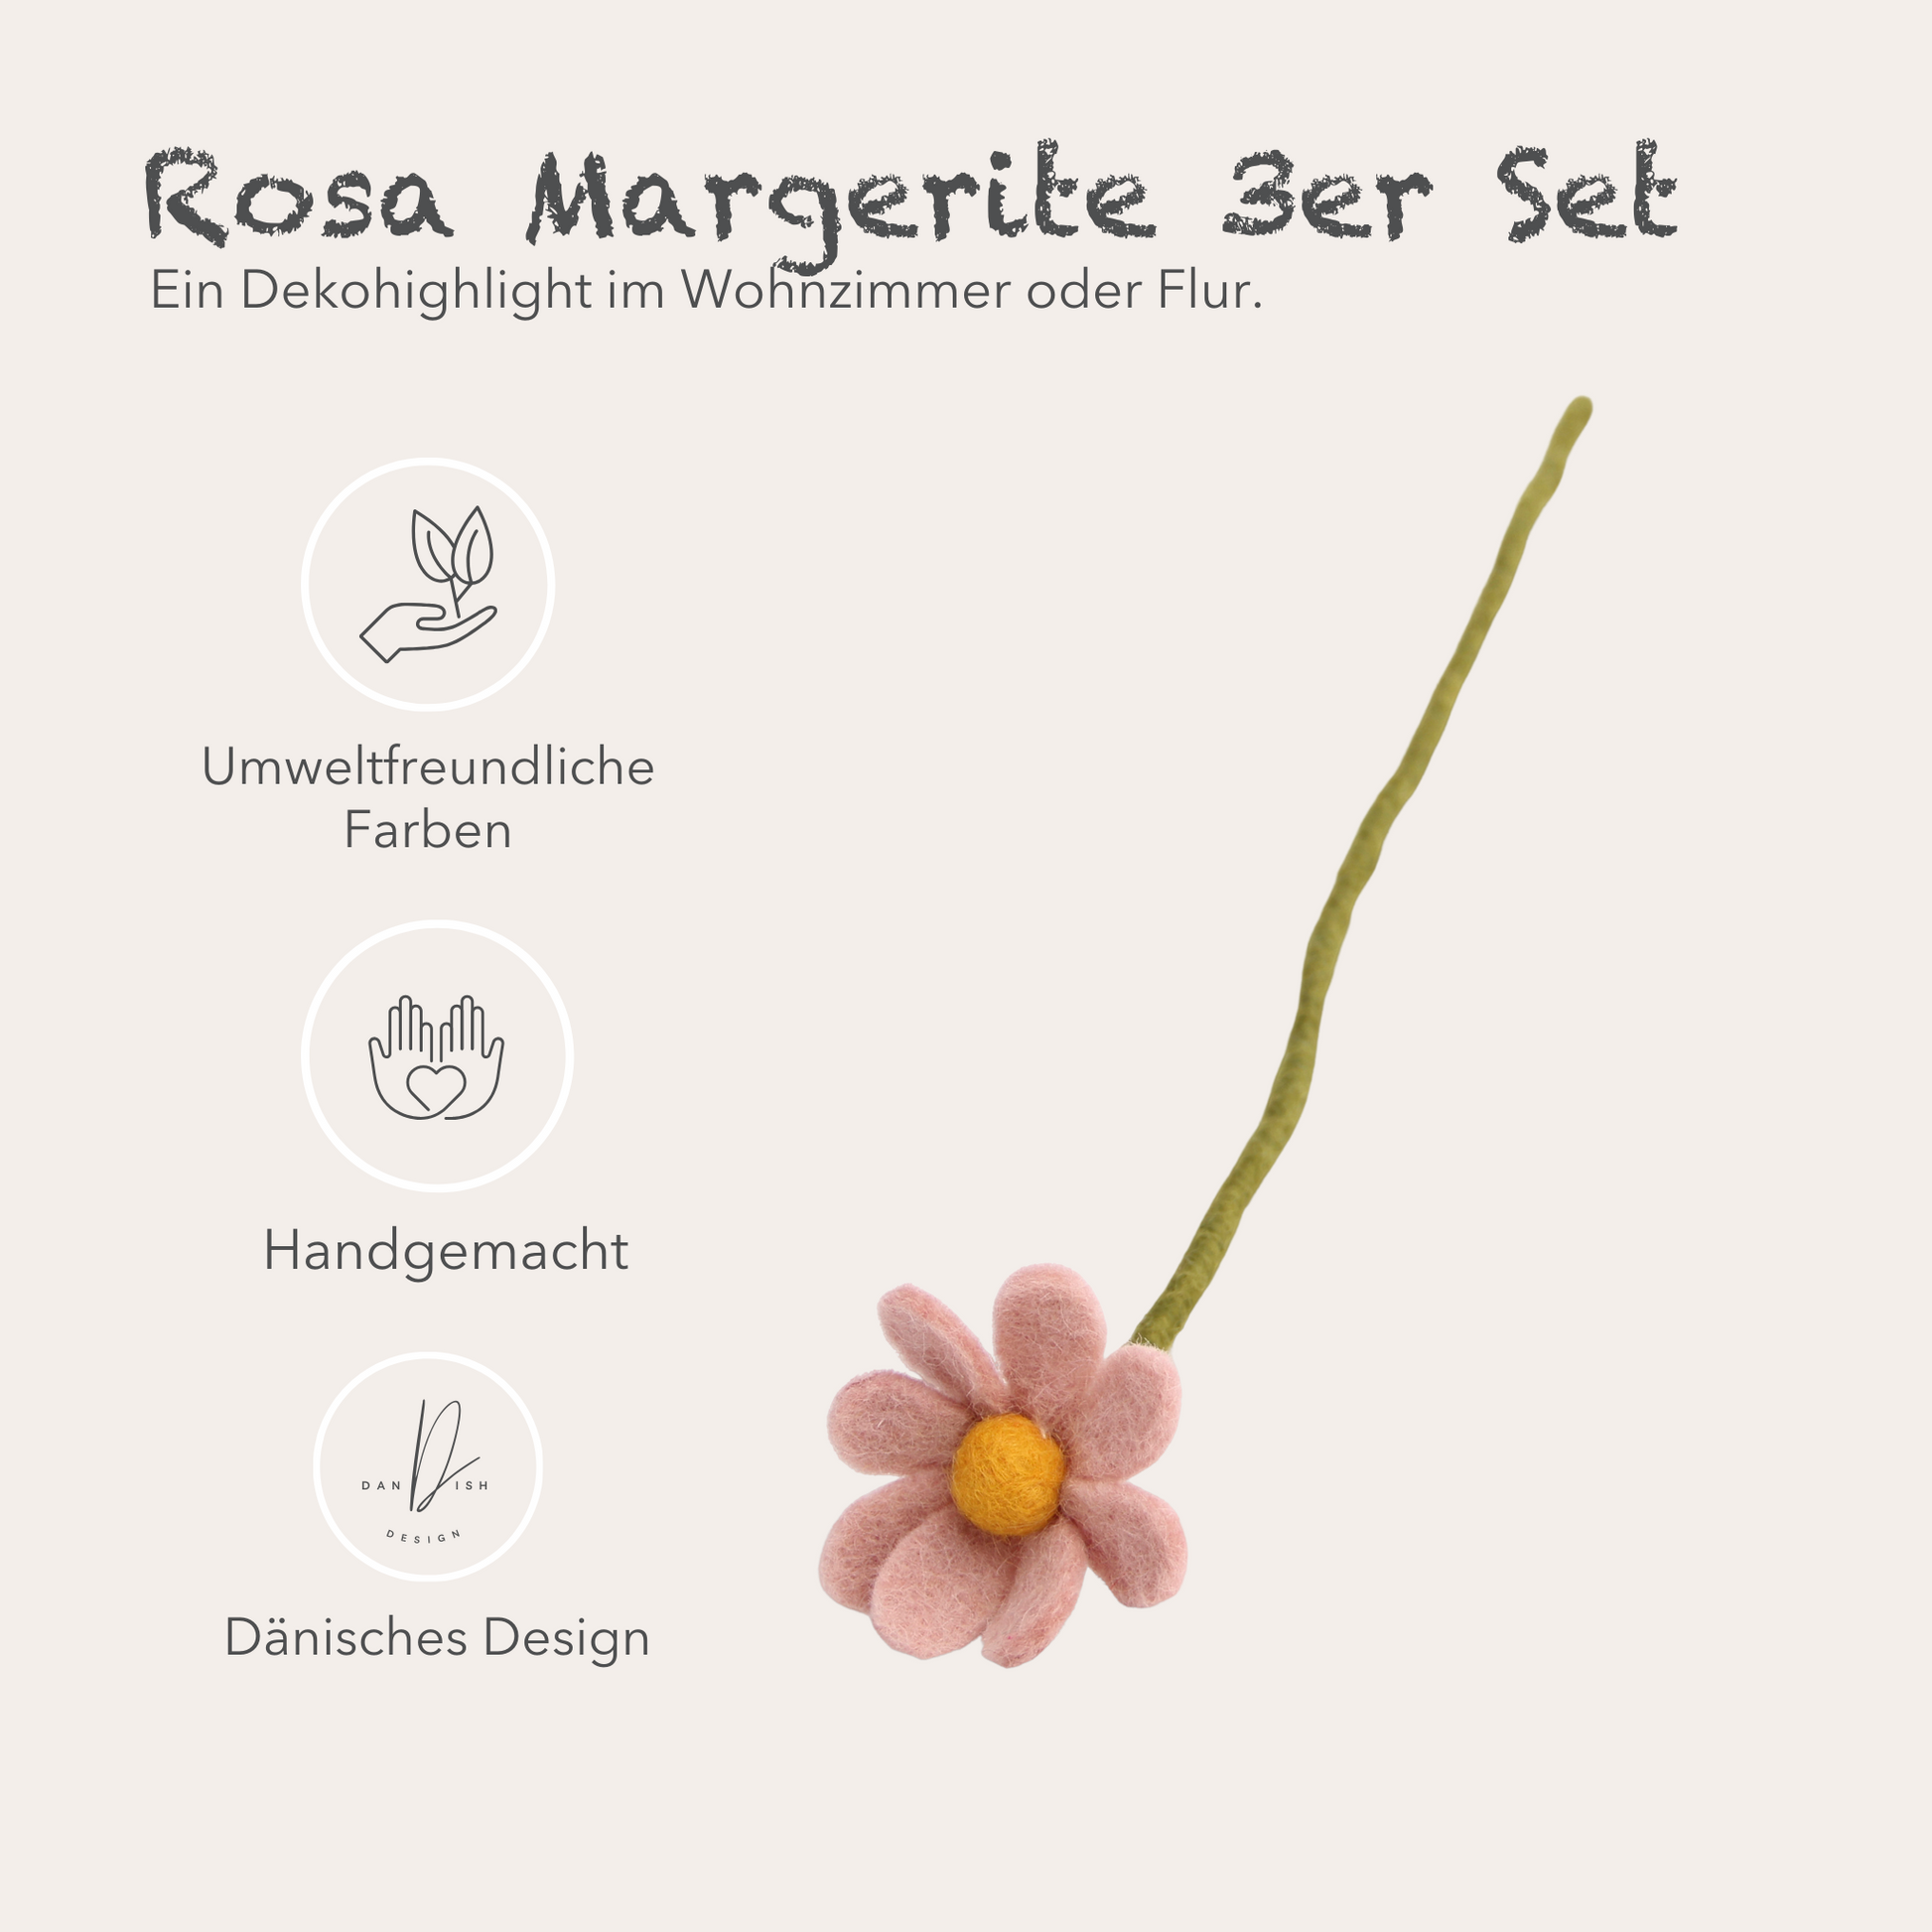 Gry & Set, Margerite Anemone, handgefilzte Sif Kunstblume Filzlig Rosa – 3er